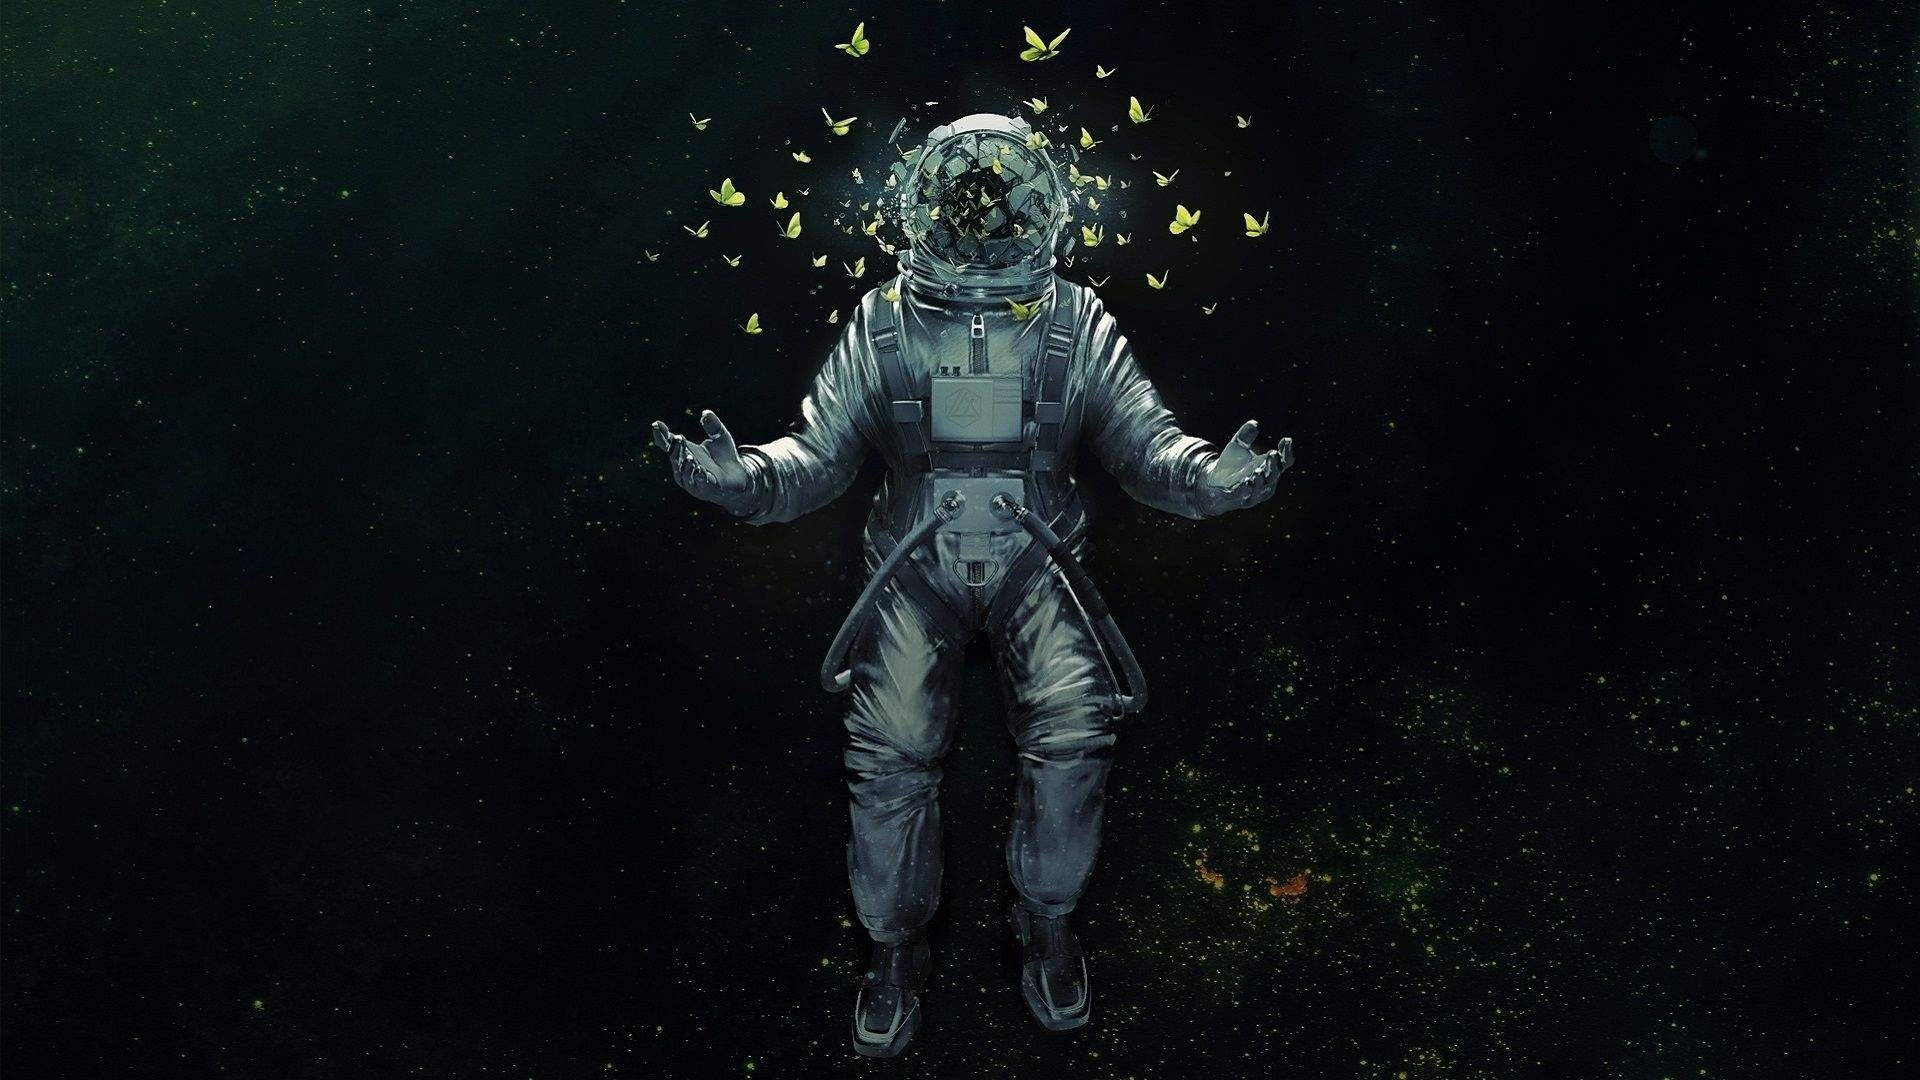 Trippy Dark Astronaut With Butterflies In Space Wallpaper